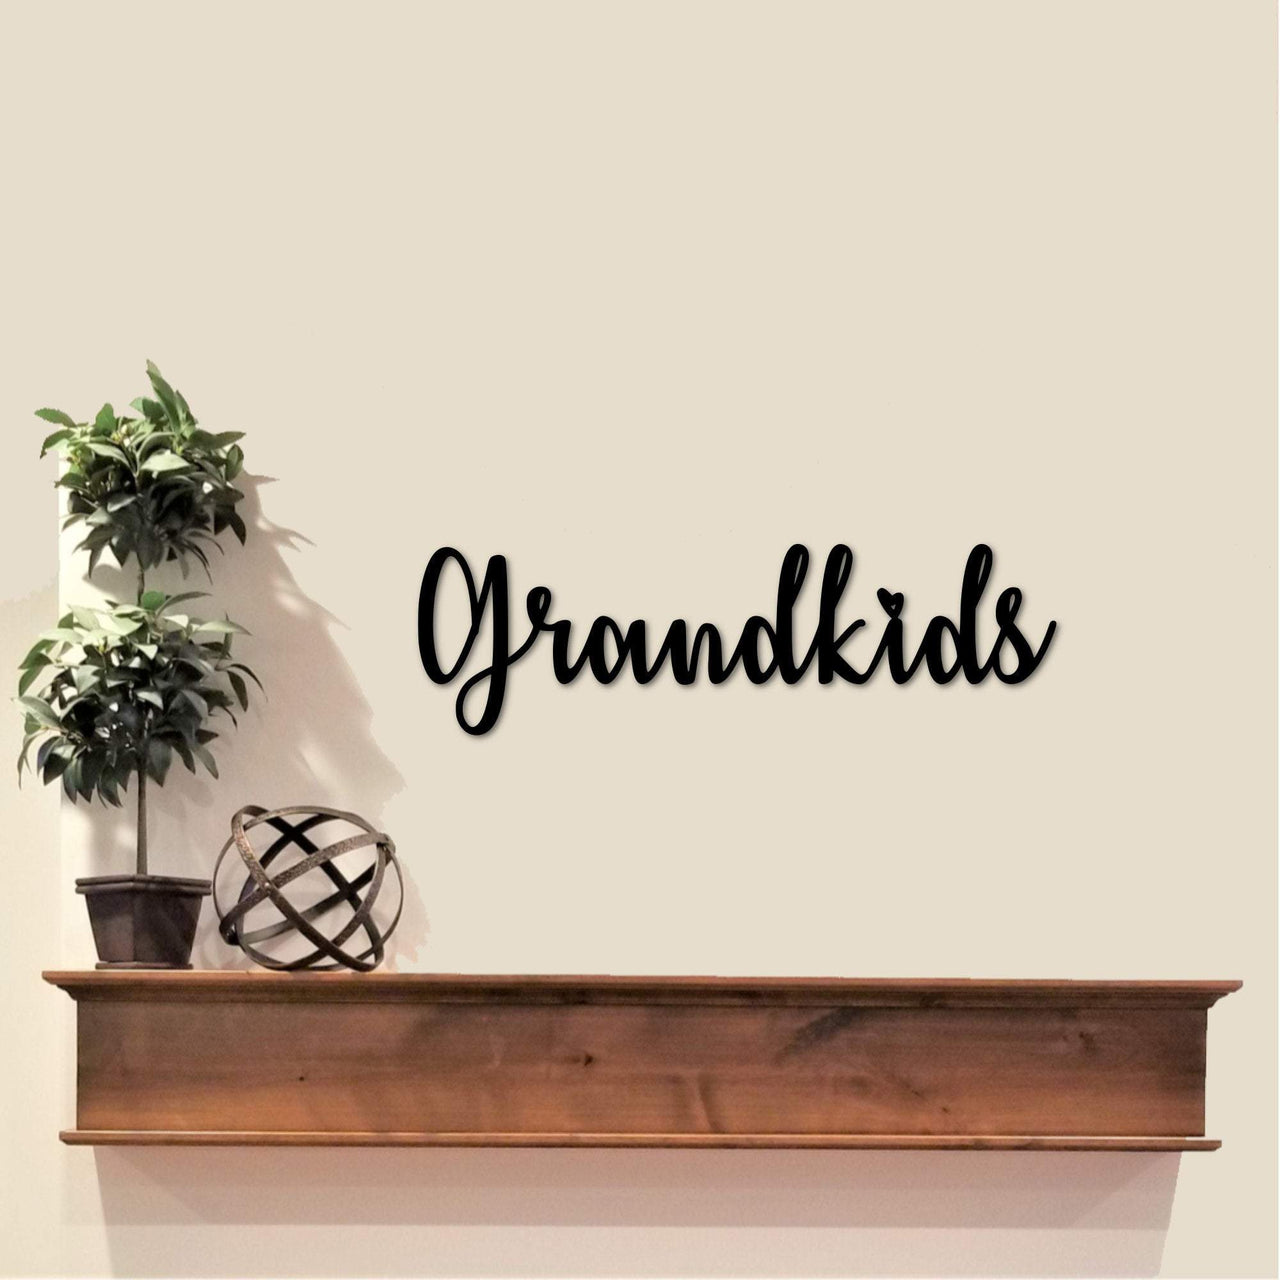 Metal Grandkids Sign | Grandkids Wall Hanging | Grandparents Gift | Grandchildren Sign | Grandkids Word Art | Grandkids Picture Gallery Wall